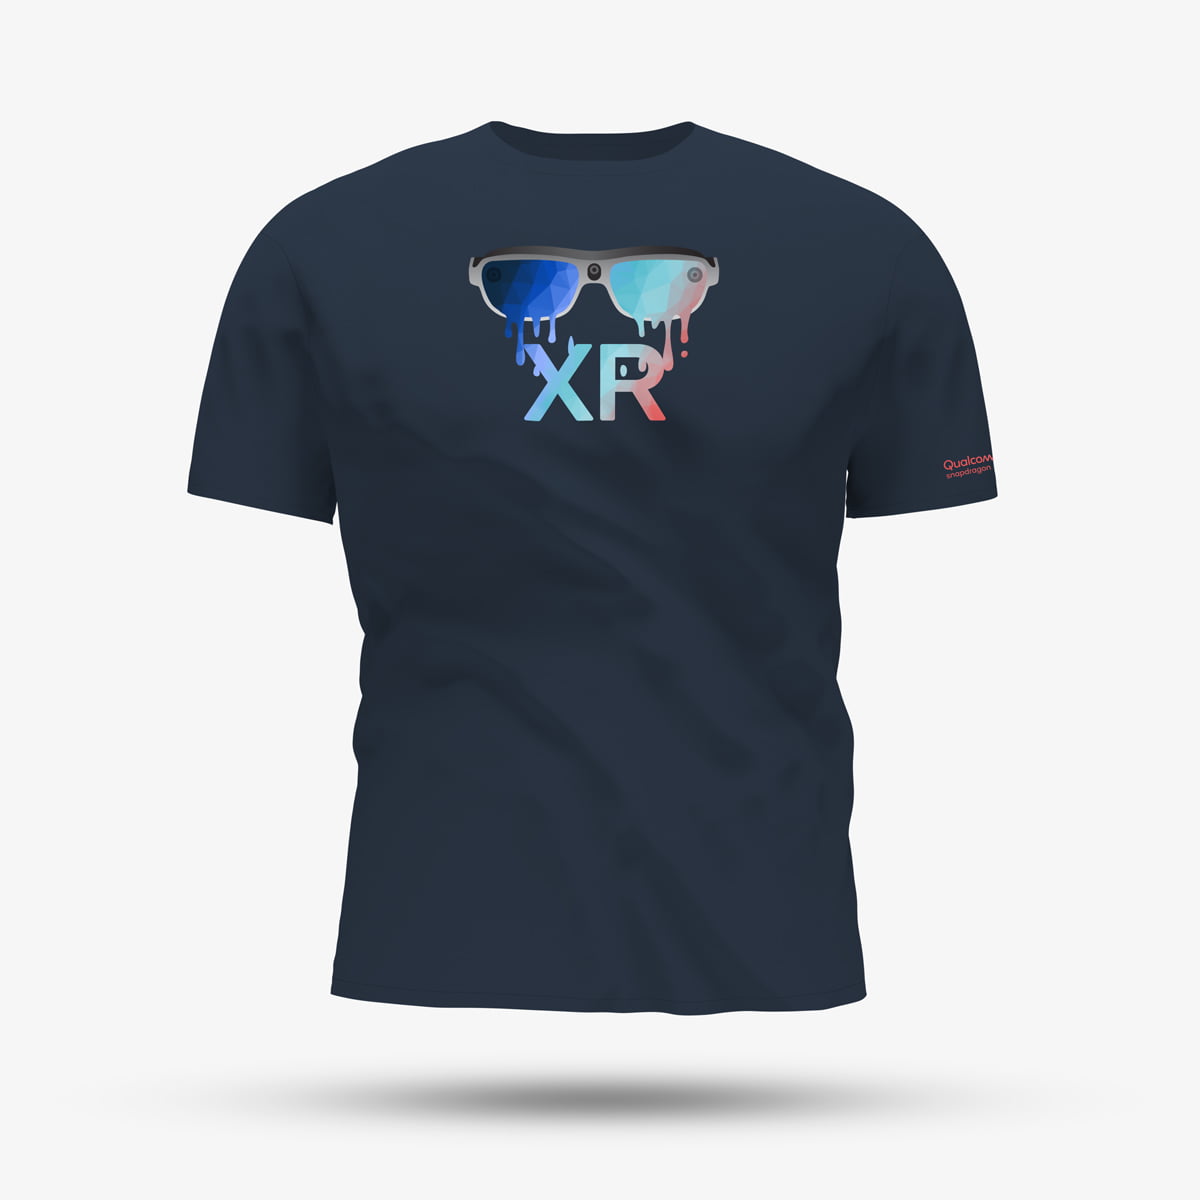 Qualcomm XR t-shirt design